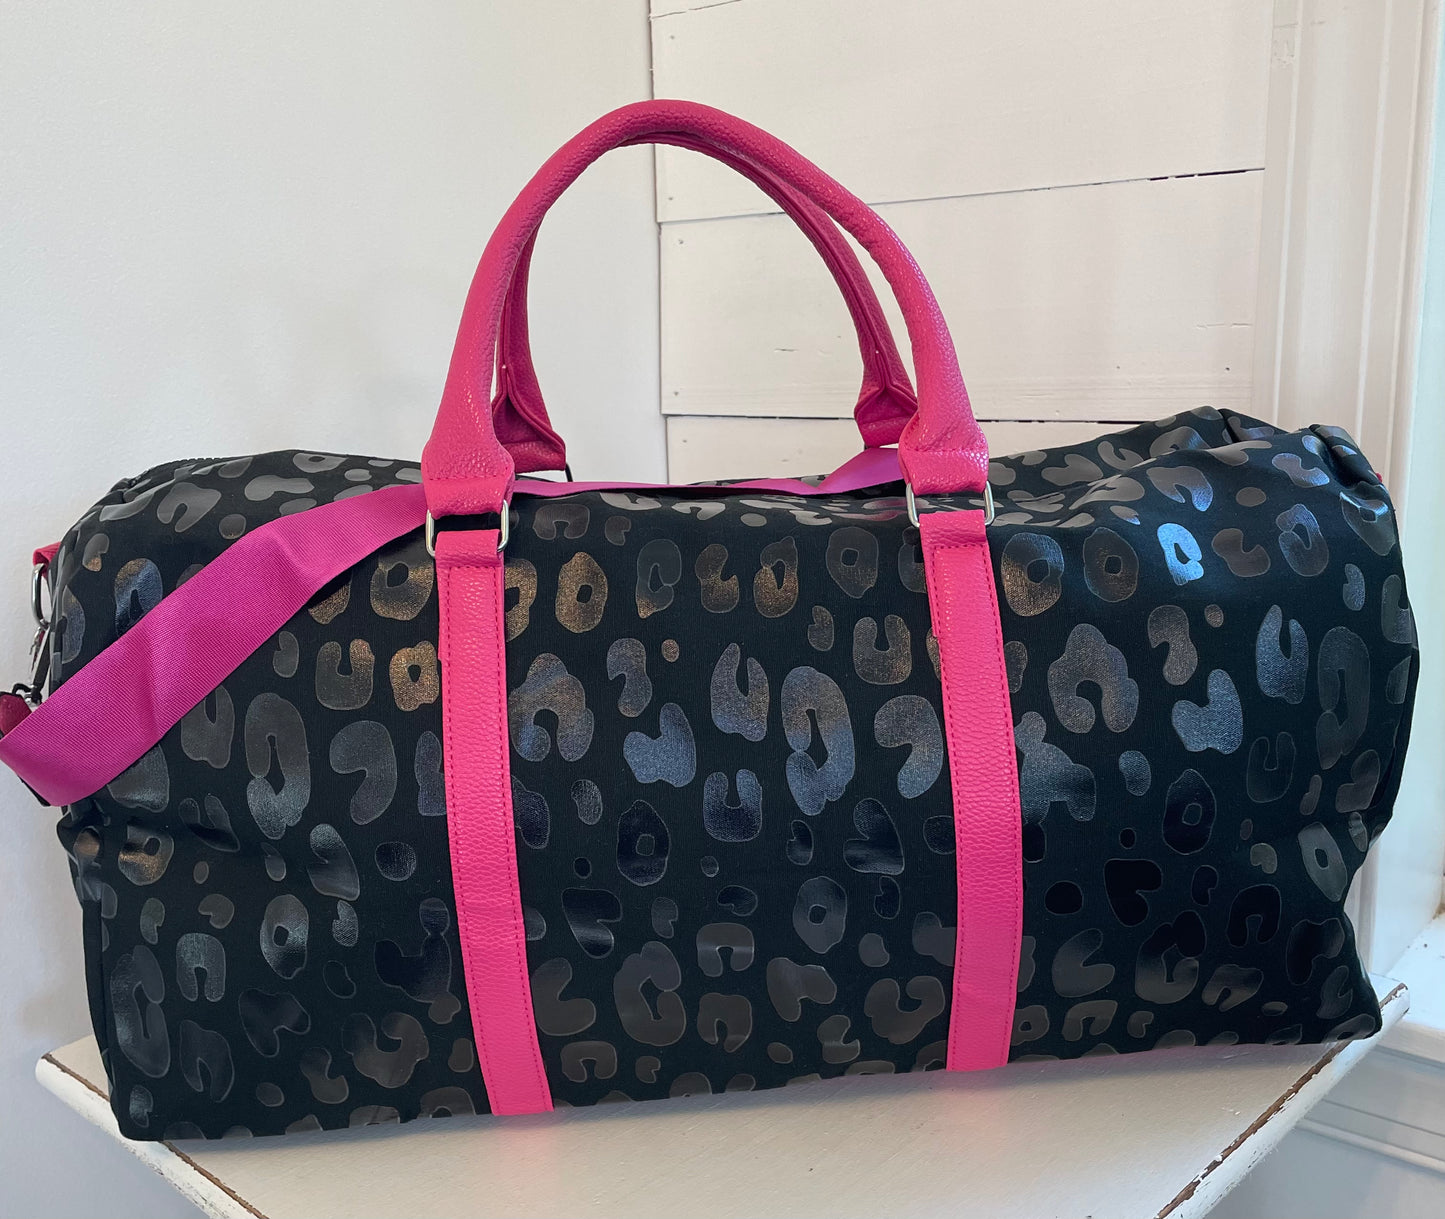 Black Leopard with Hot Pink Weekender Duffle /Gorgeous Weekender/Luggage/ Black Leopard Travel Bag/ PU Leather PU Leather Duffel/Weekender Bag Duffel/Weekender Bag PU Leather